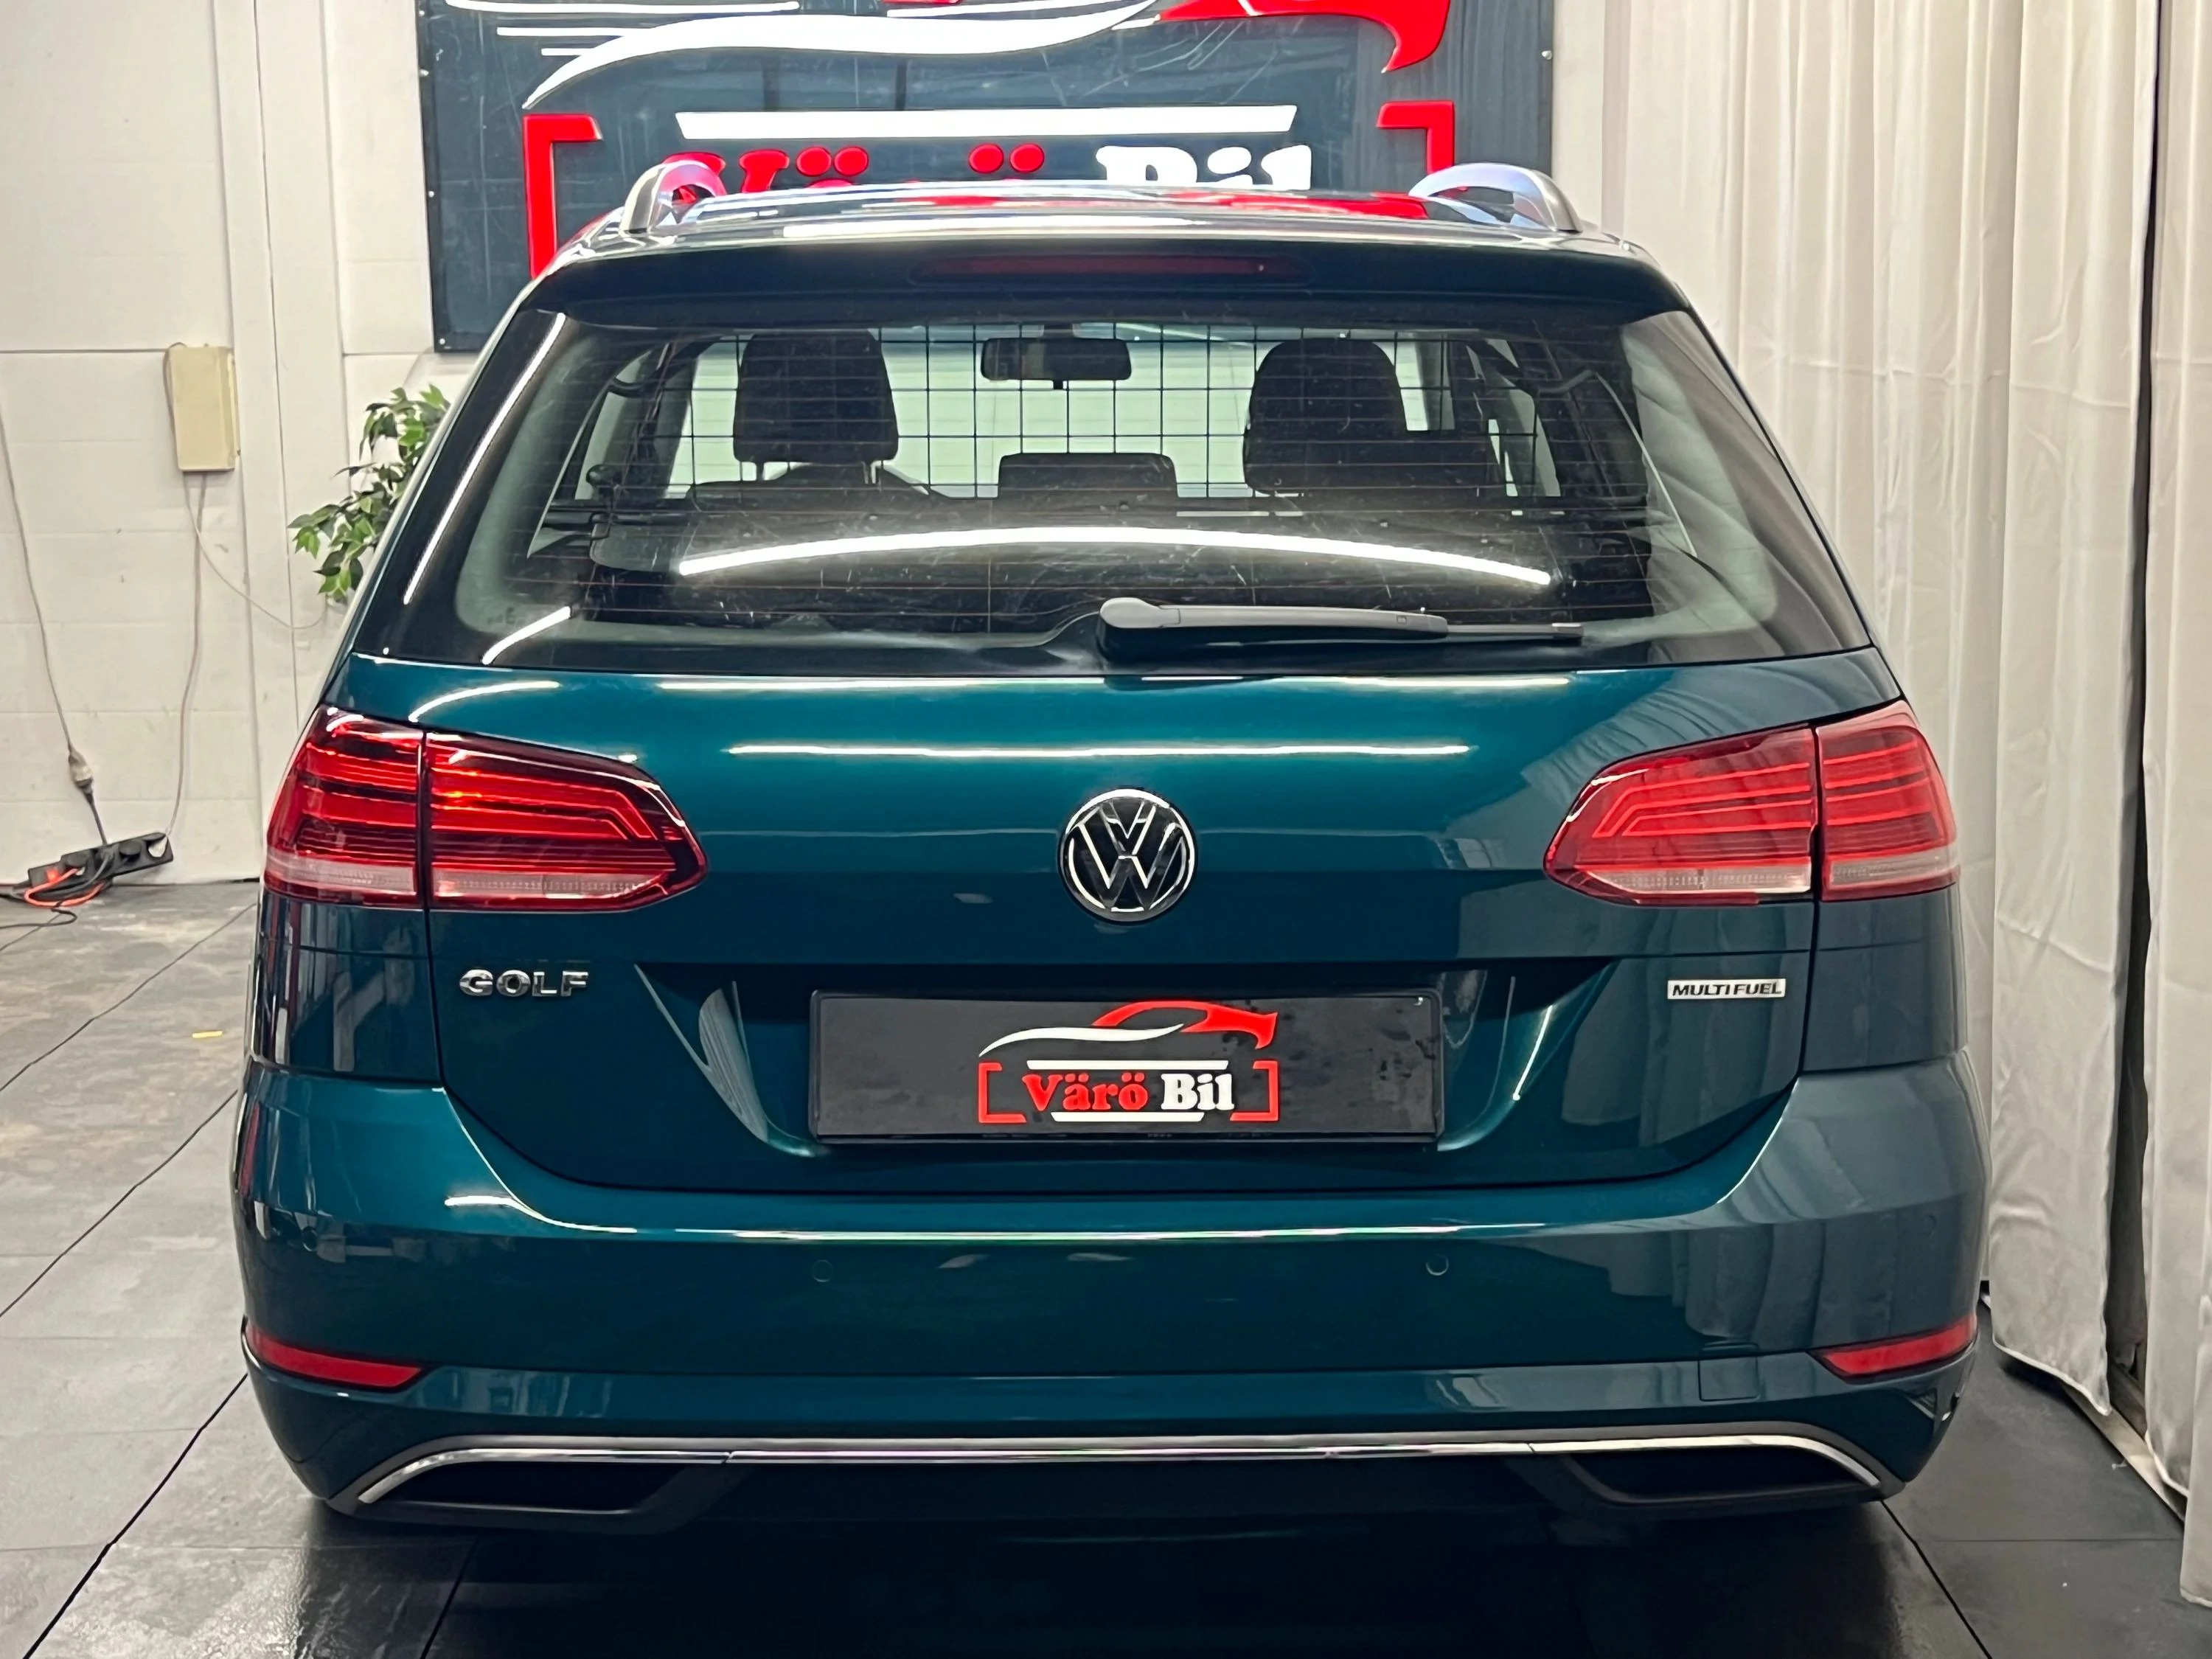 Volkswagen Golf Sportscombi 1.4 TSI MultiFuel Manuell, 125hk, 2018